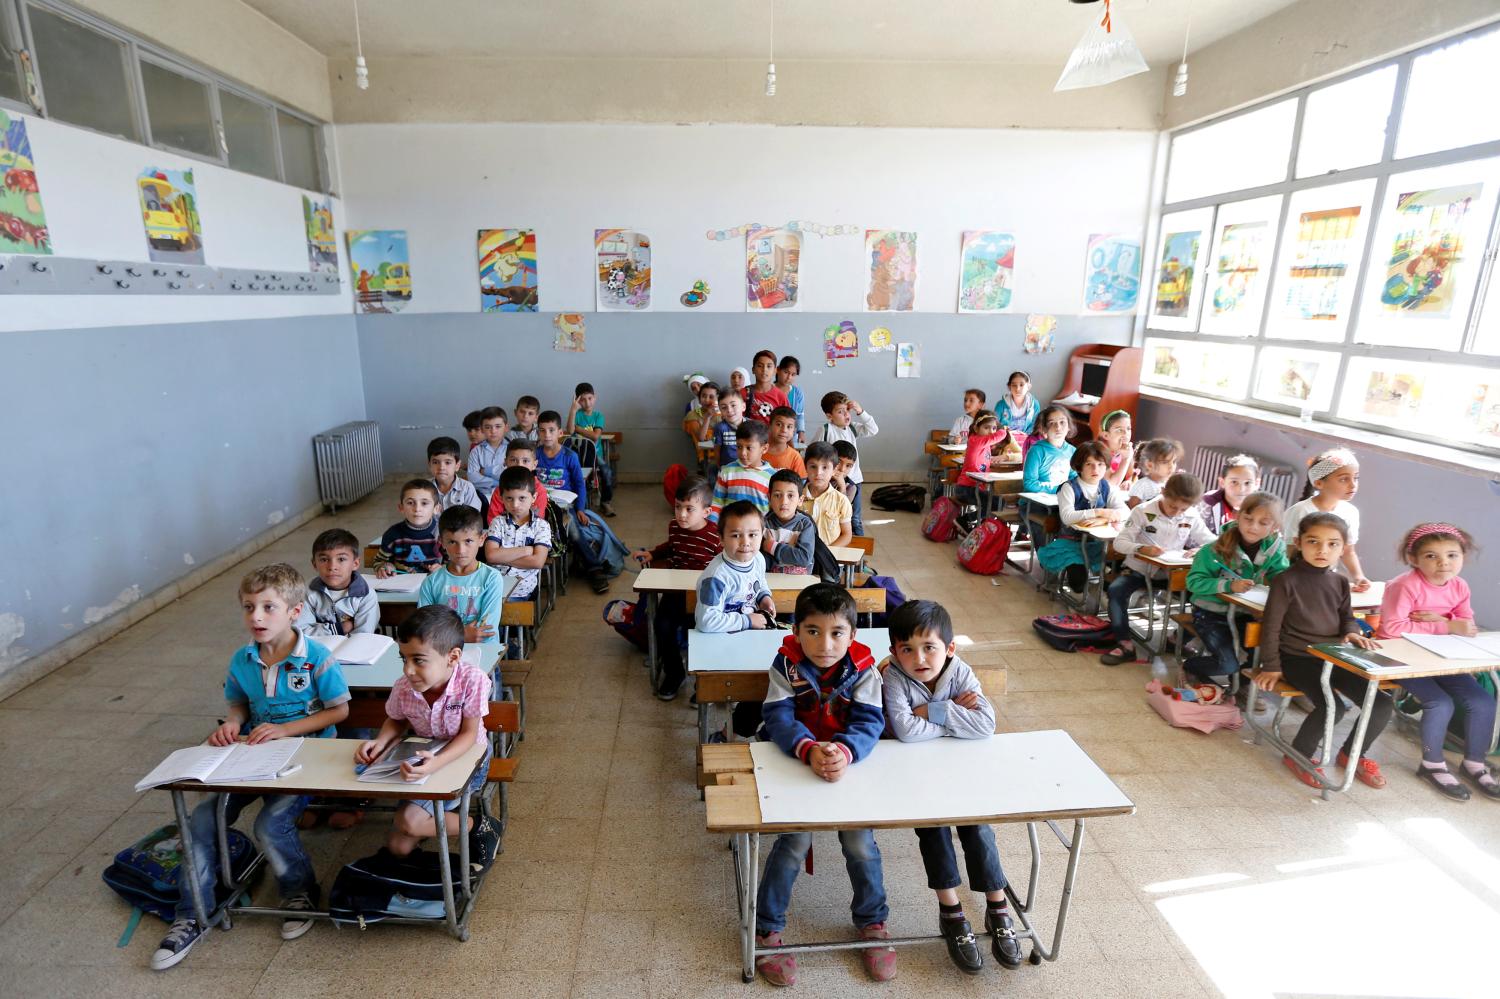 Syrian refugee children attend a class at a school in Mount Lebanon, October 7, 2016. REUTERS/Mohamed Azakir - RTSR7GP